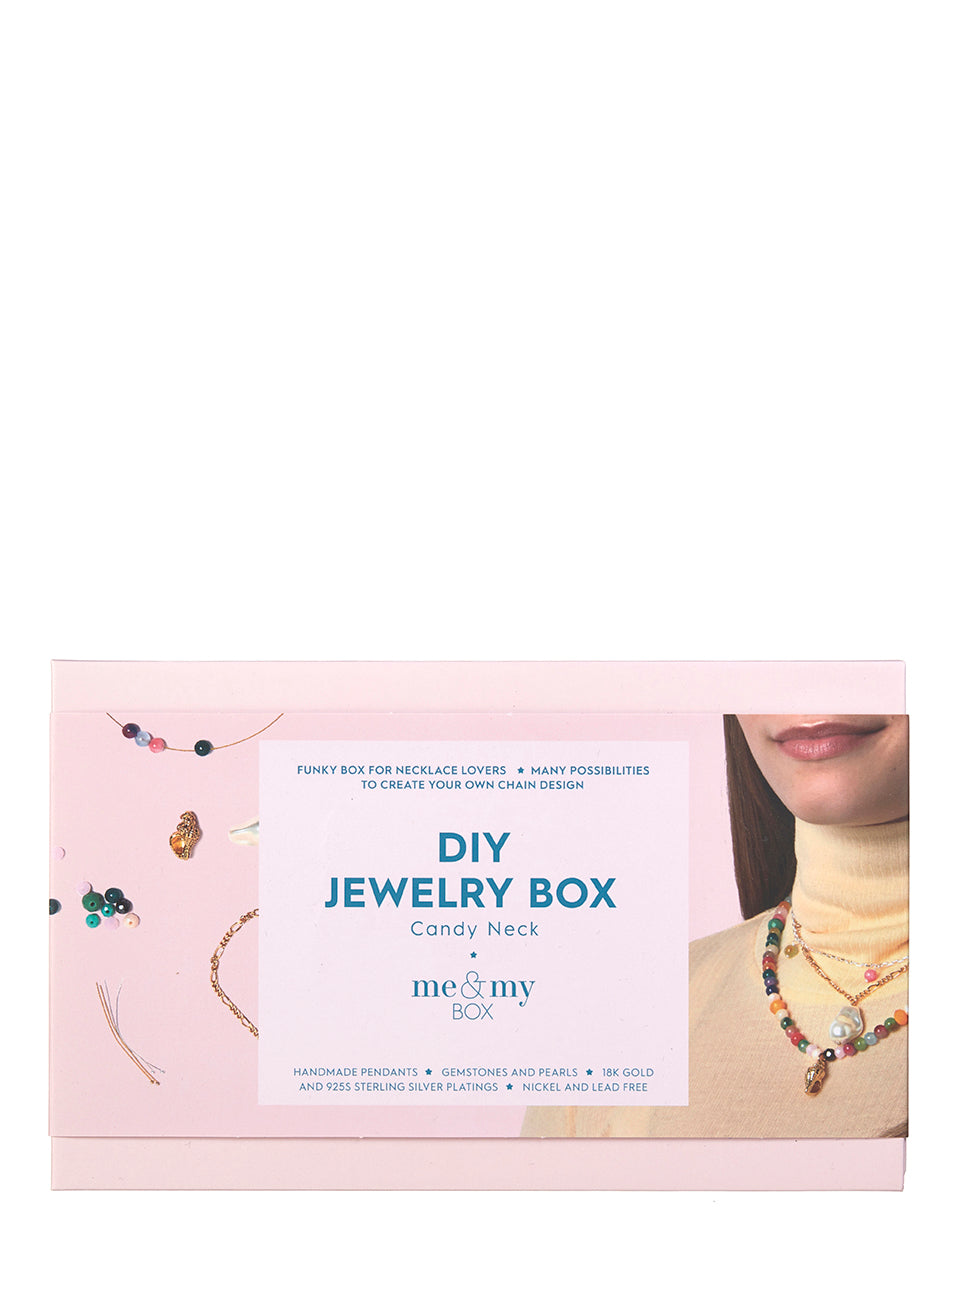 Candy Neck jewelry design set - box no 9